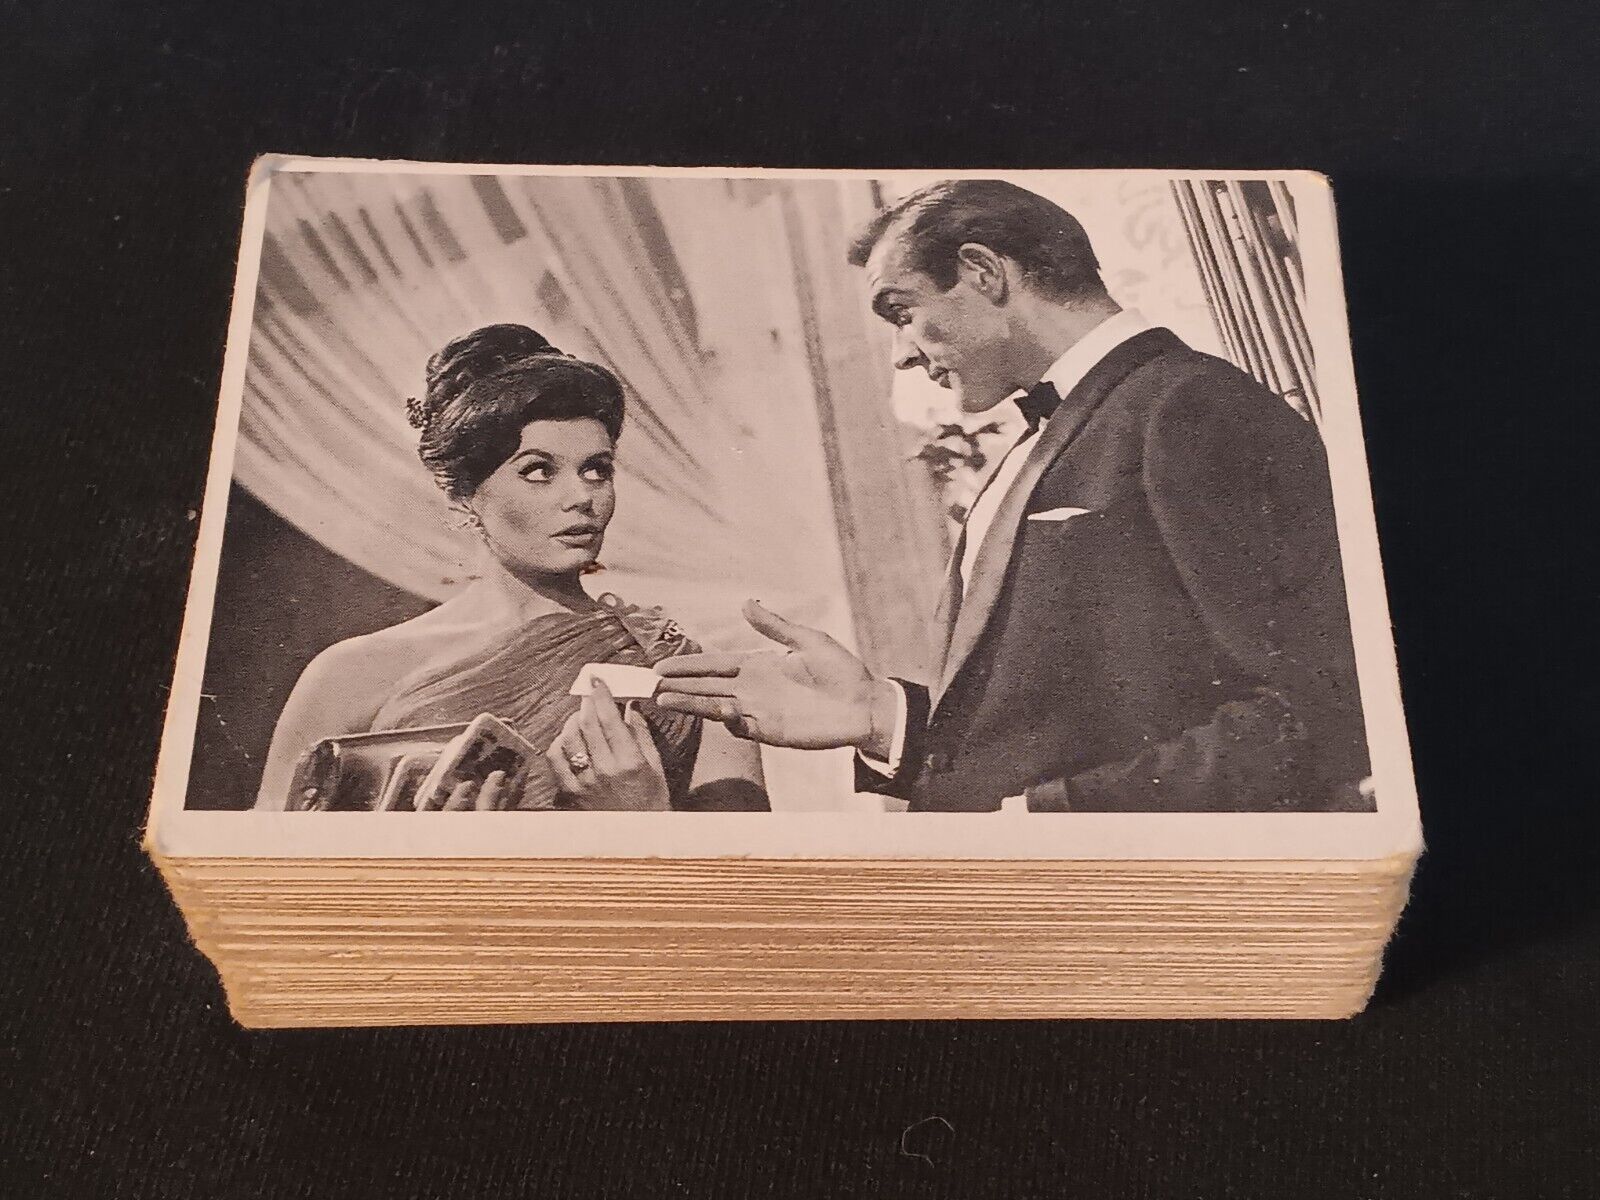 1965 PHILADELPHIA JAMES BOND PARTIAL SET 58 OF 66. MISSING 8 CARDS. VERY GOOD